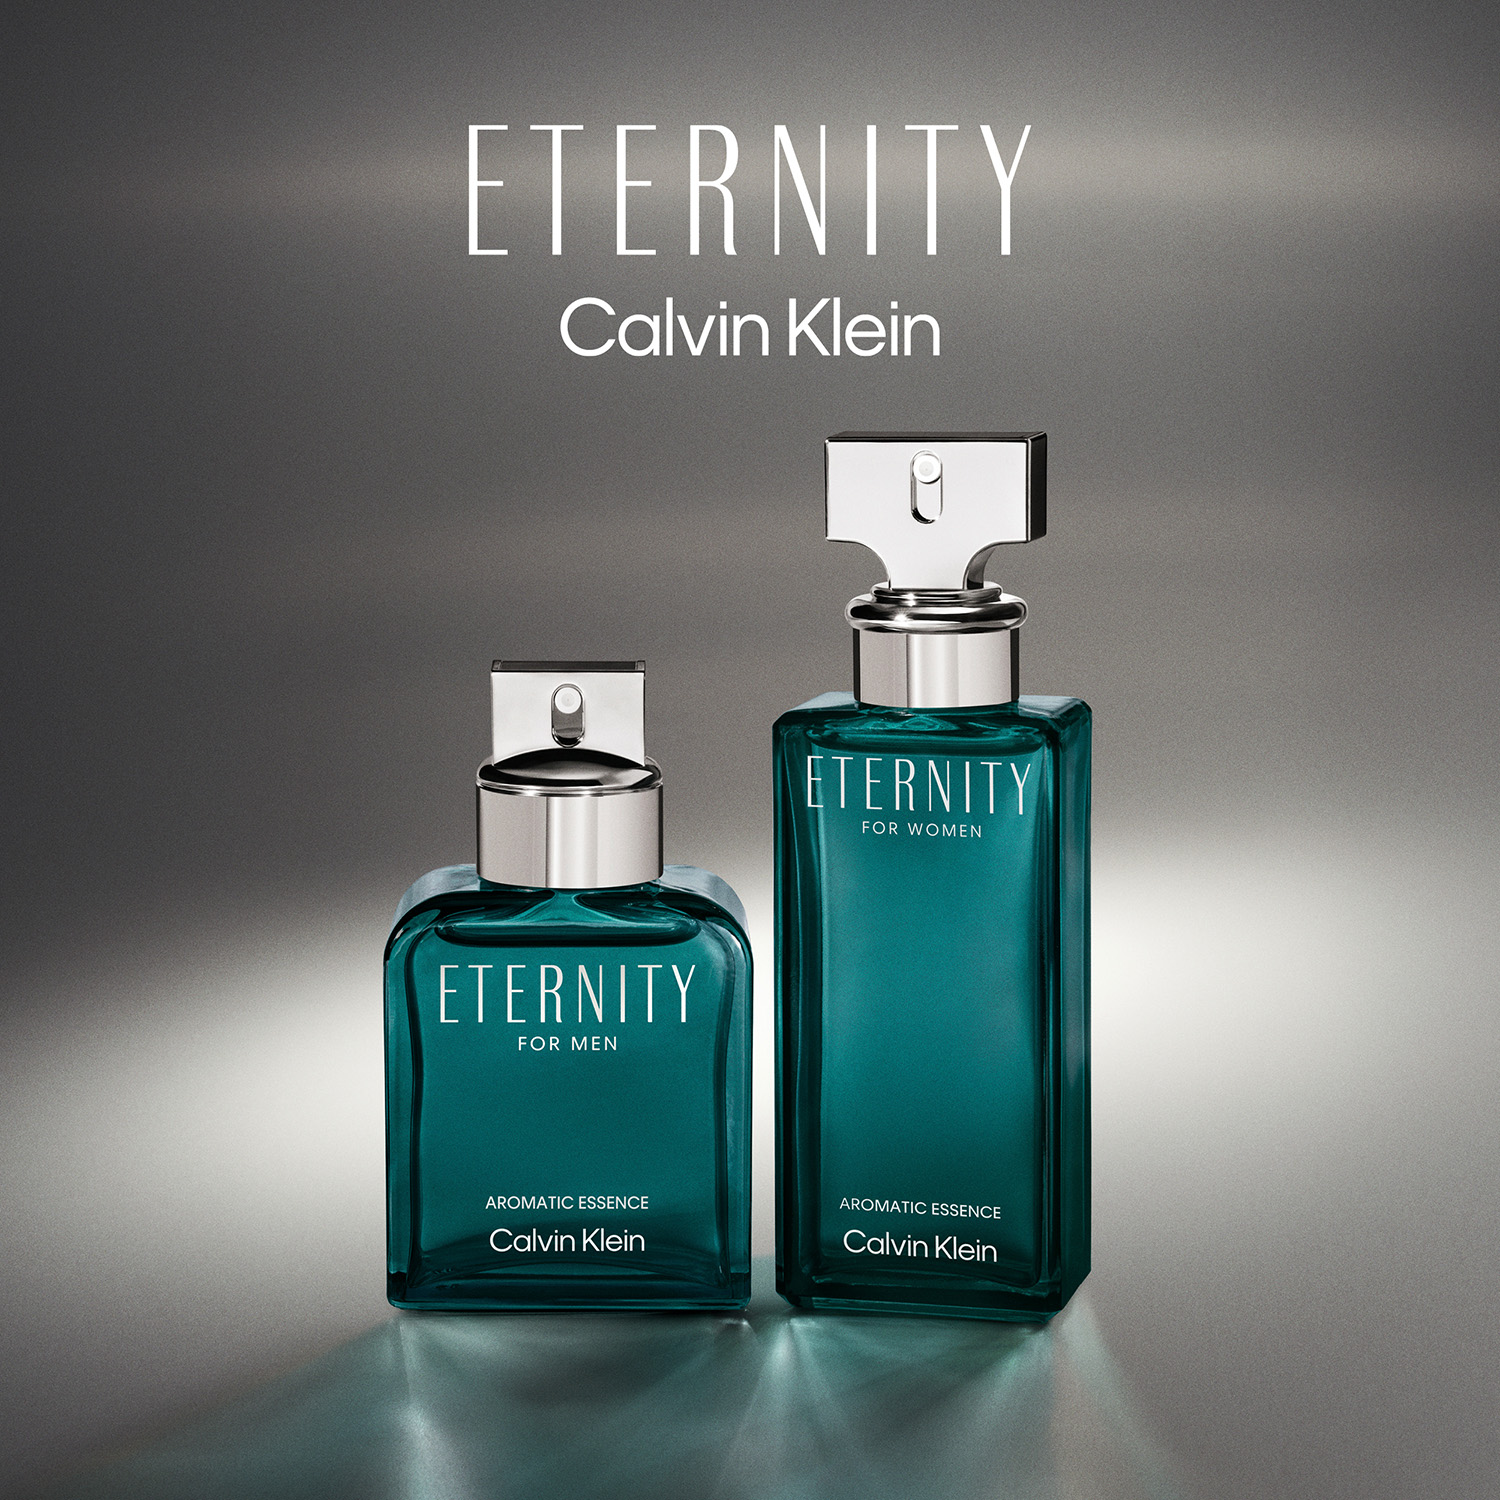 Calvin Klein Eternity Aromatic Essence for Men Parfum 100ml